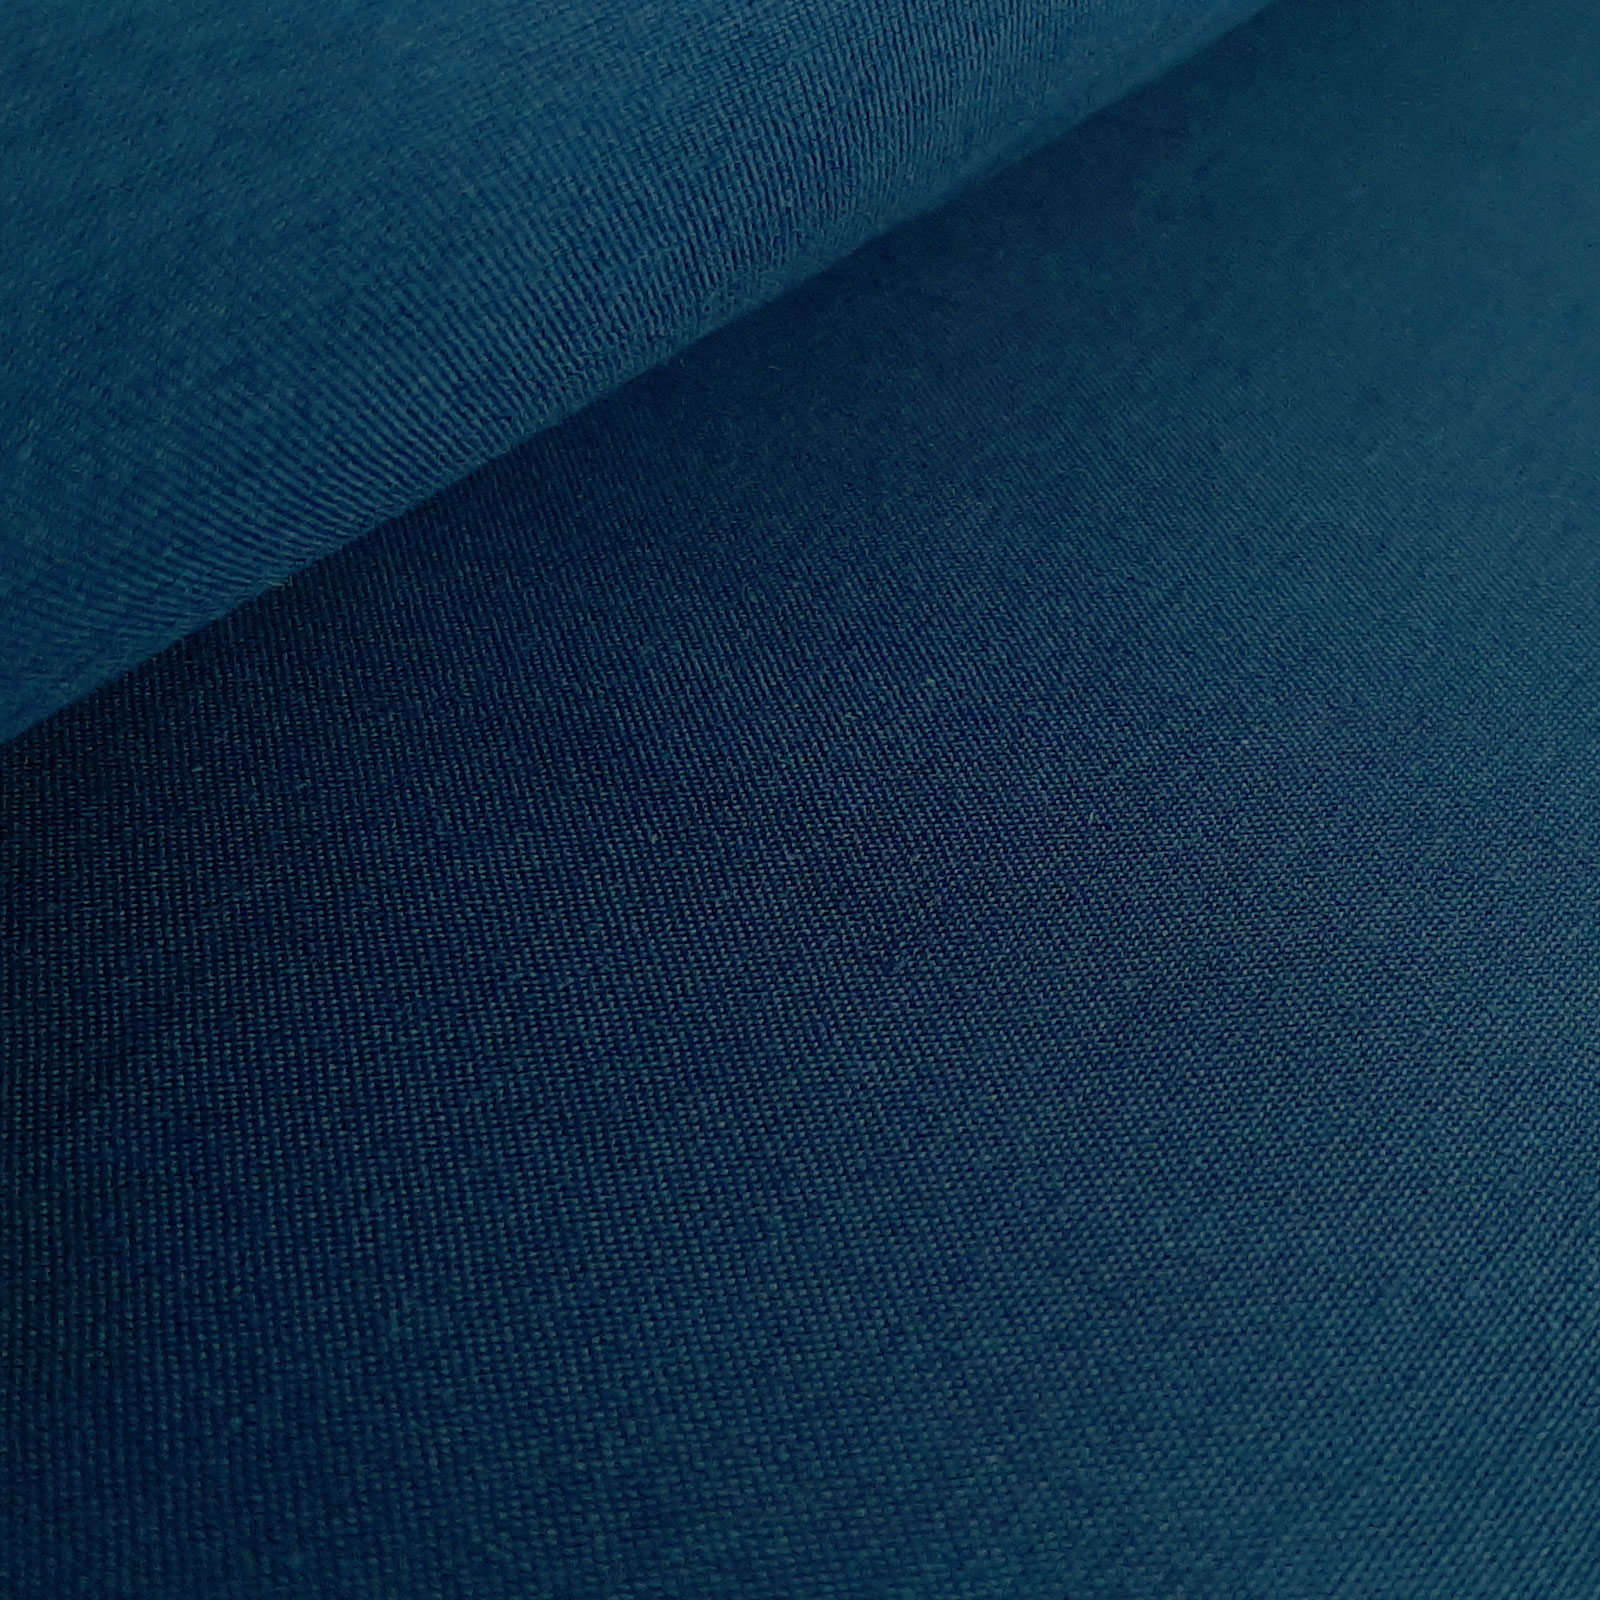 Hedwig - Öko Tex® cotton poplin - dark blue